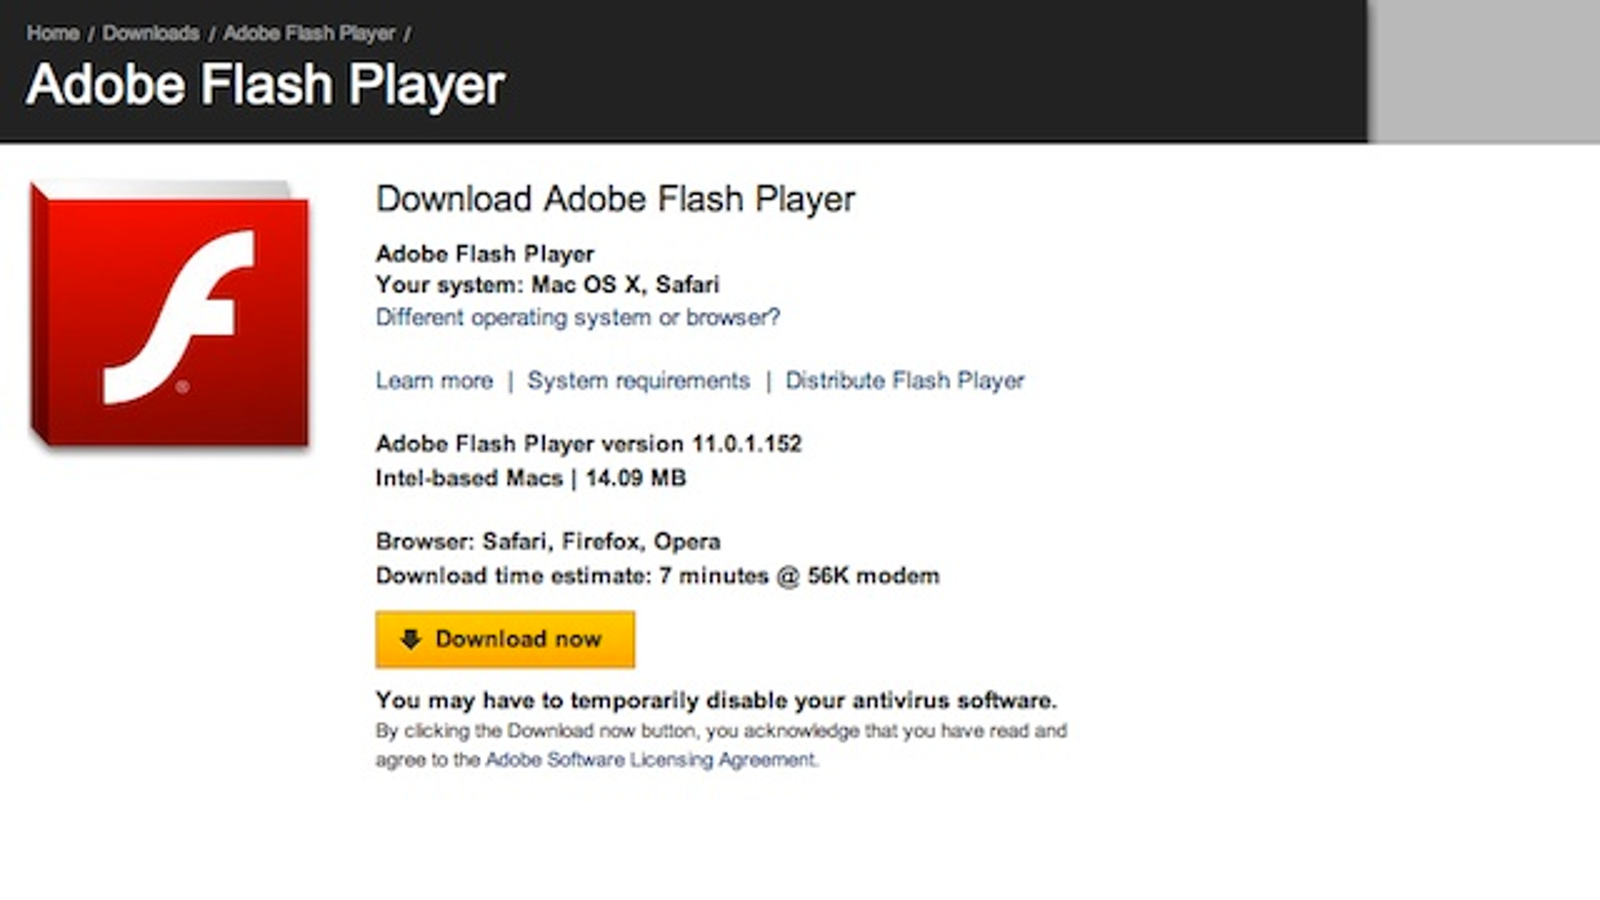 adobe flash player version 11.1.0 free download for windows 10 64 bit